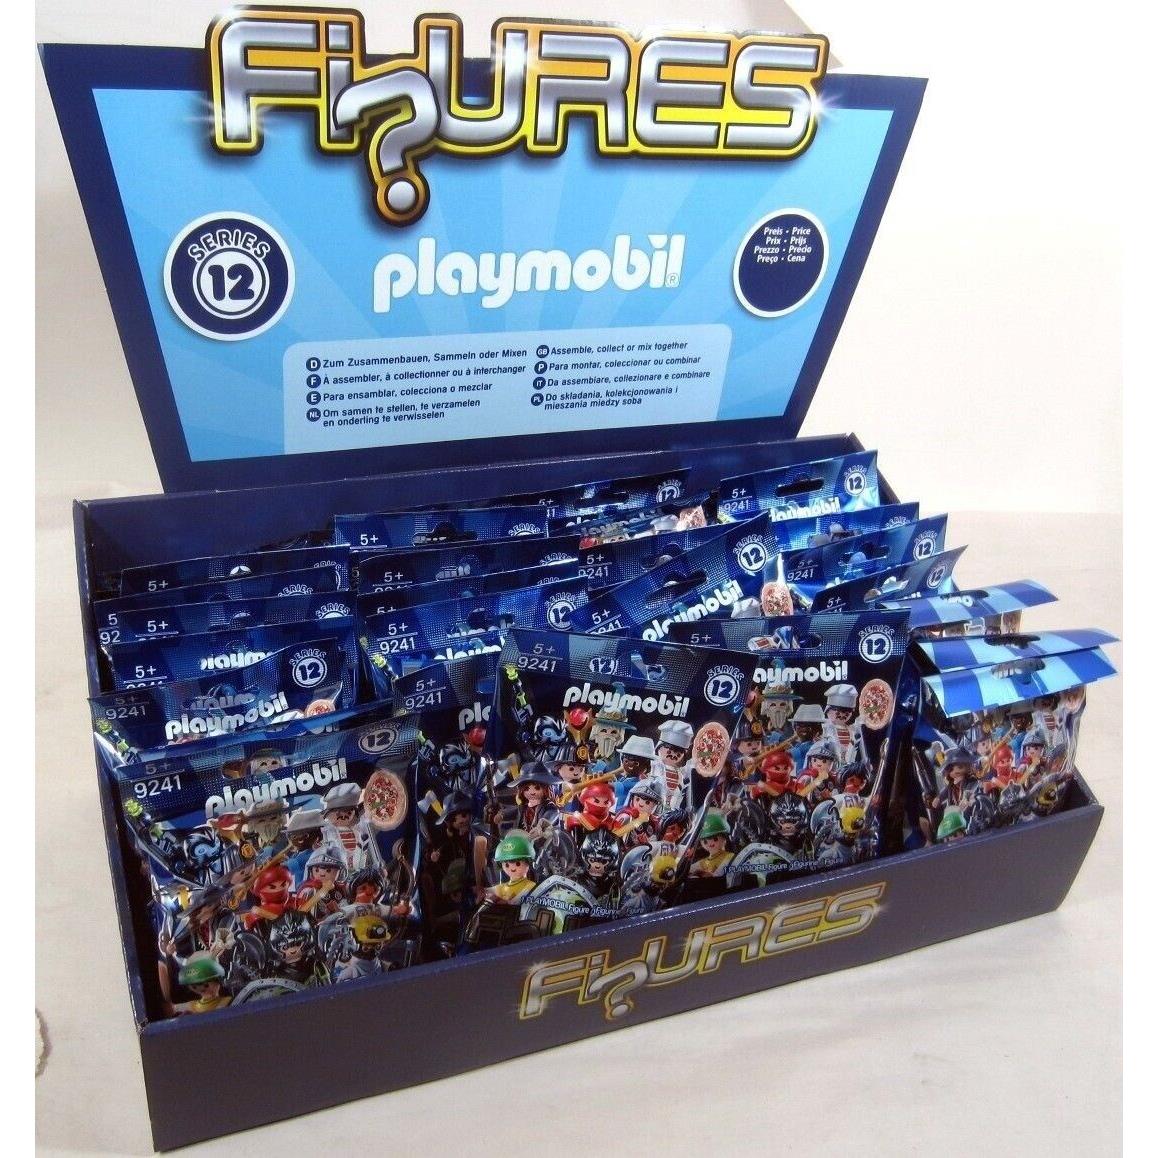 Playmobil 9241 Blue Boys Series 12 Mini Figure Case of 48 Mystery Blind Bags